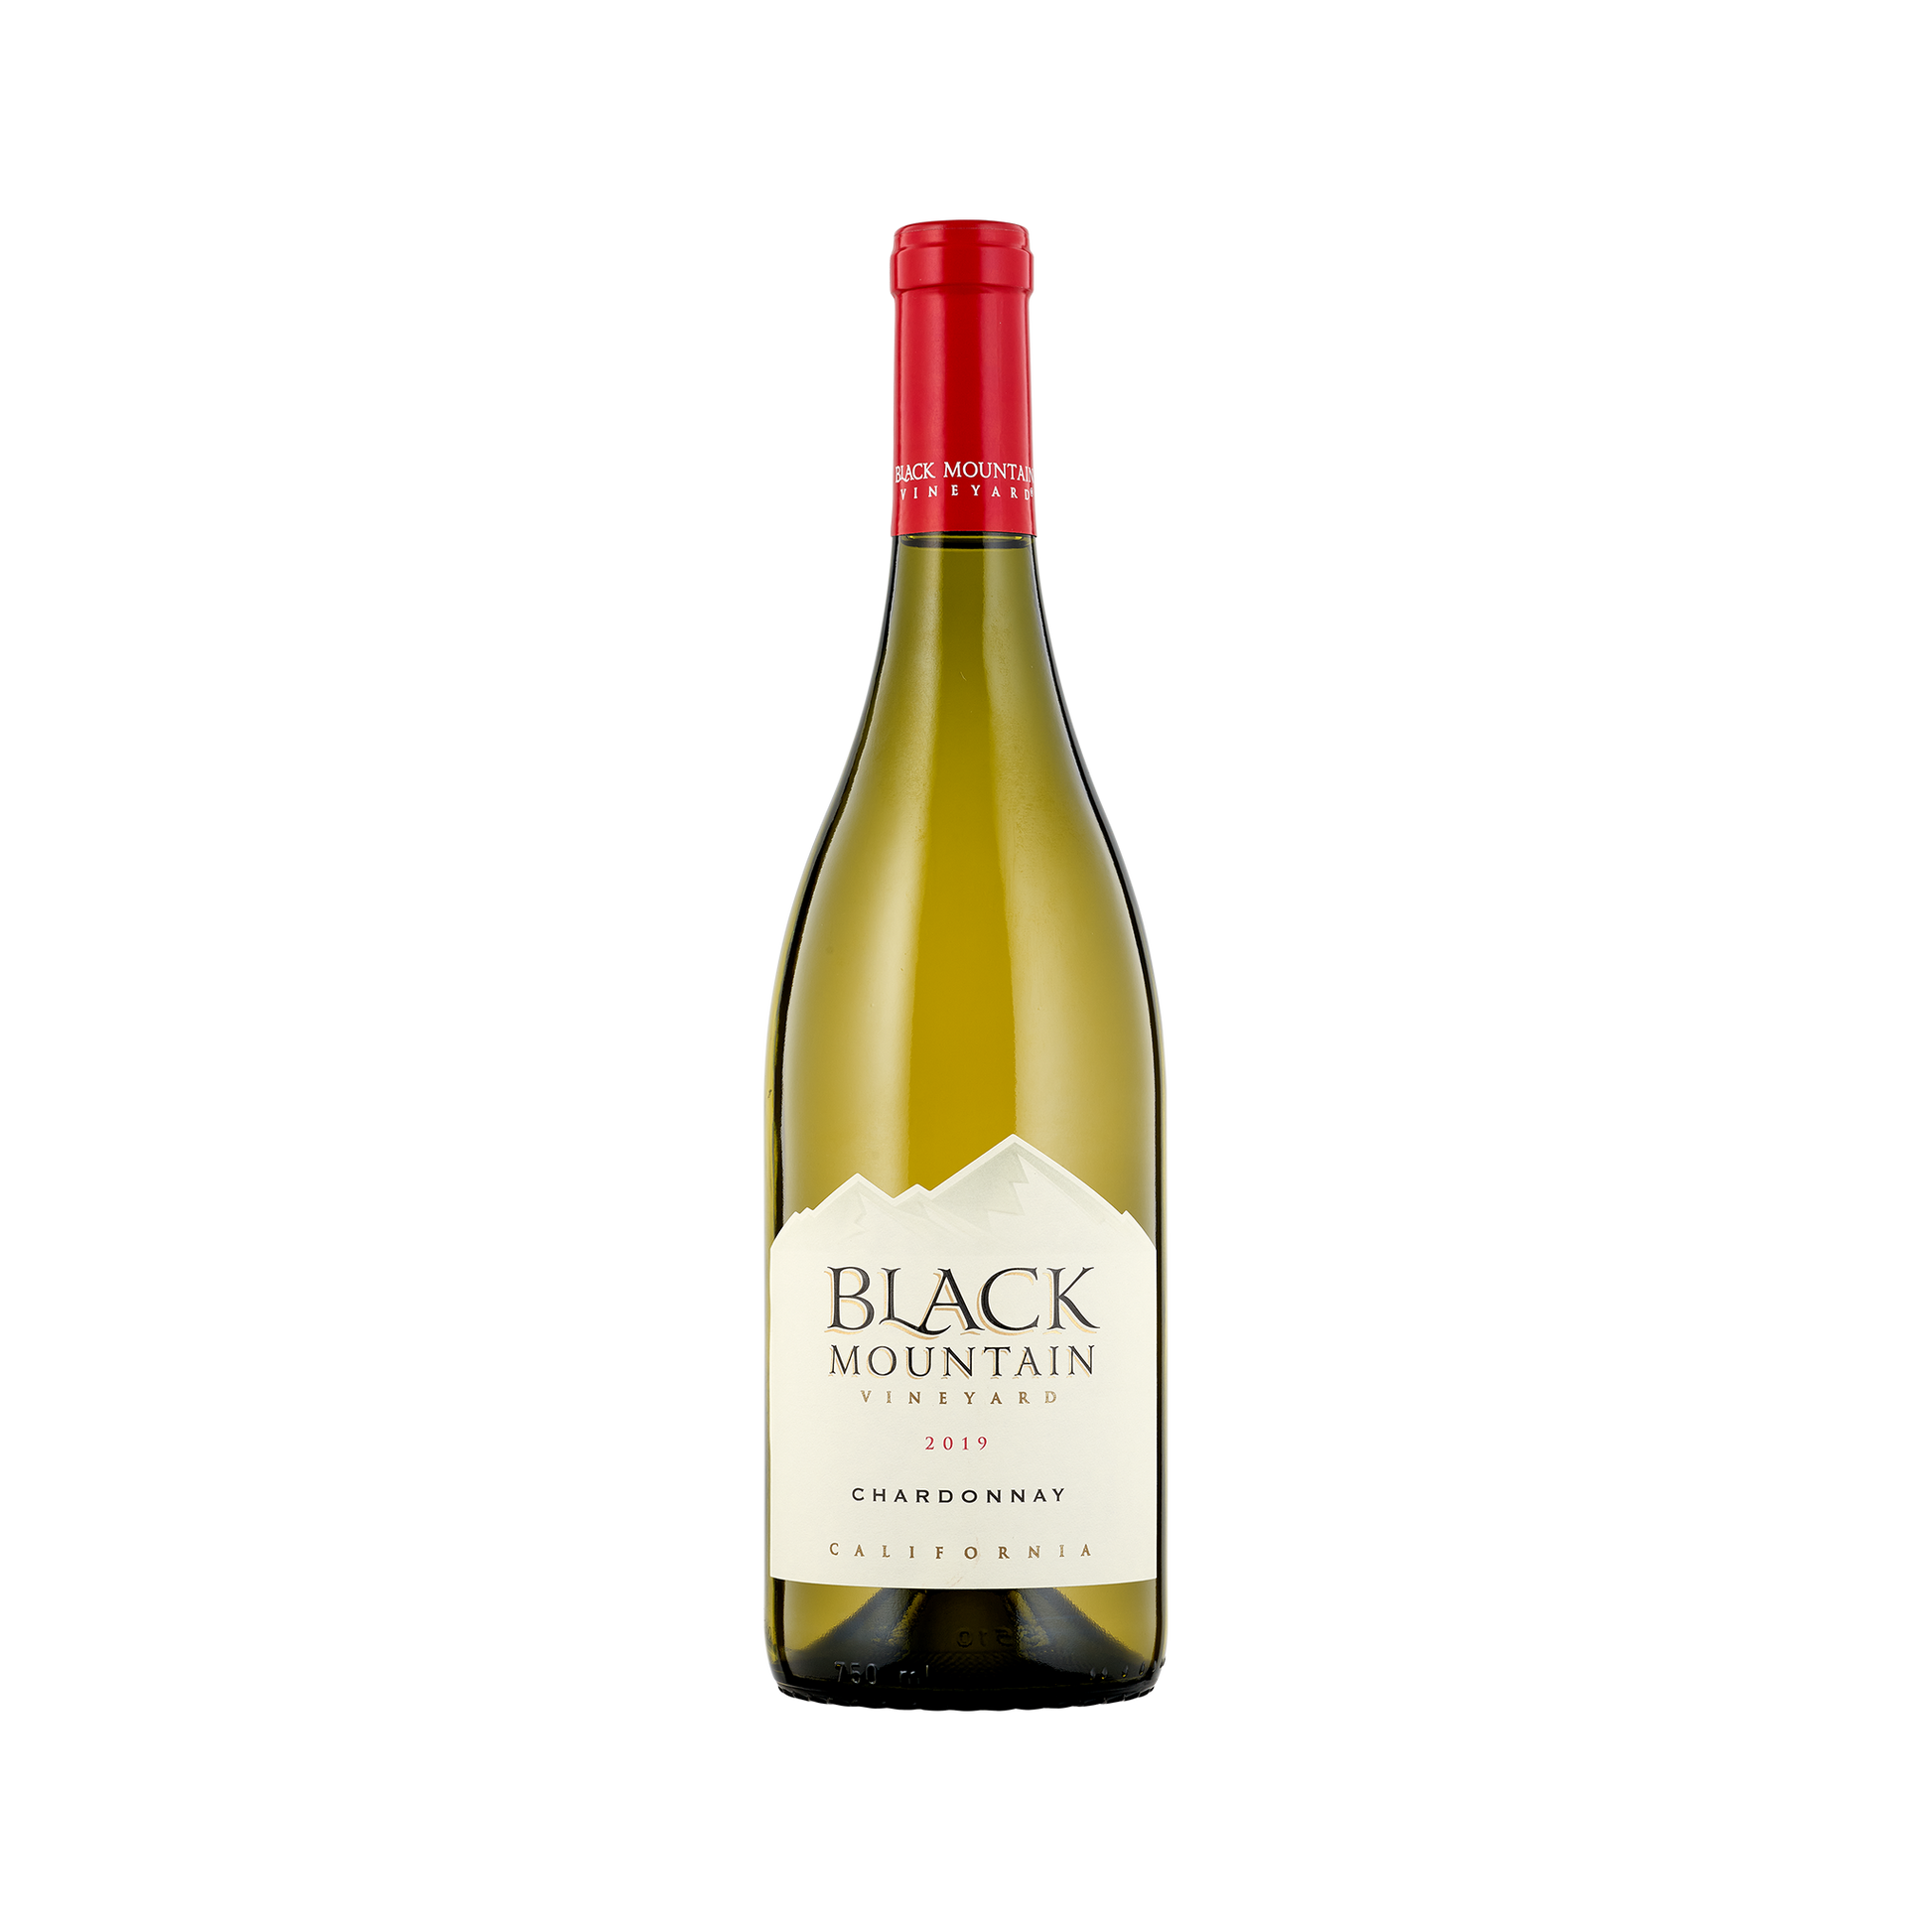 A bottle of Black Mountain 2019 Chardonnay